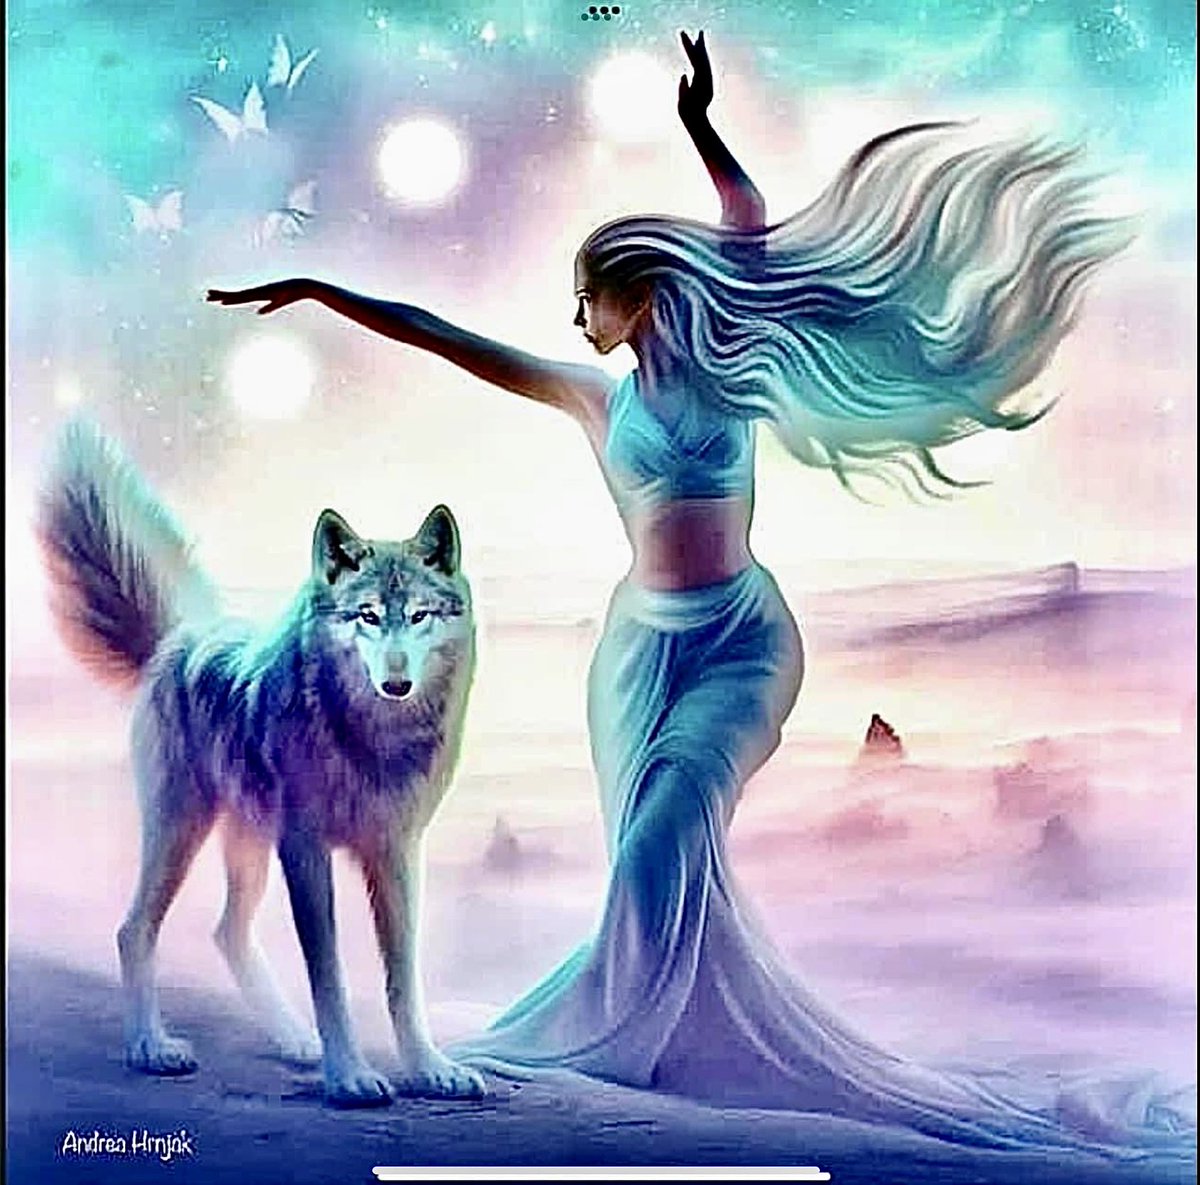 On the moon’s day we wear sky-blue. Art by Andrea Hrnjak. #coloroftheday #Mondayvibes #MondayMood #wolf #spiritanimal #WomensArt